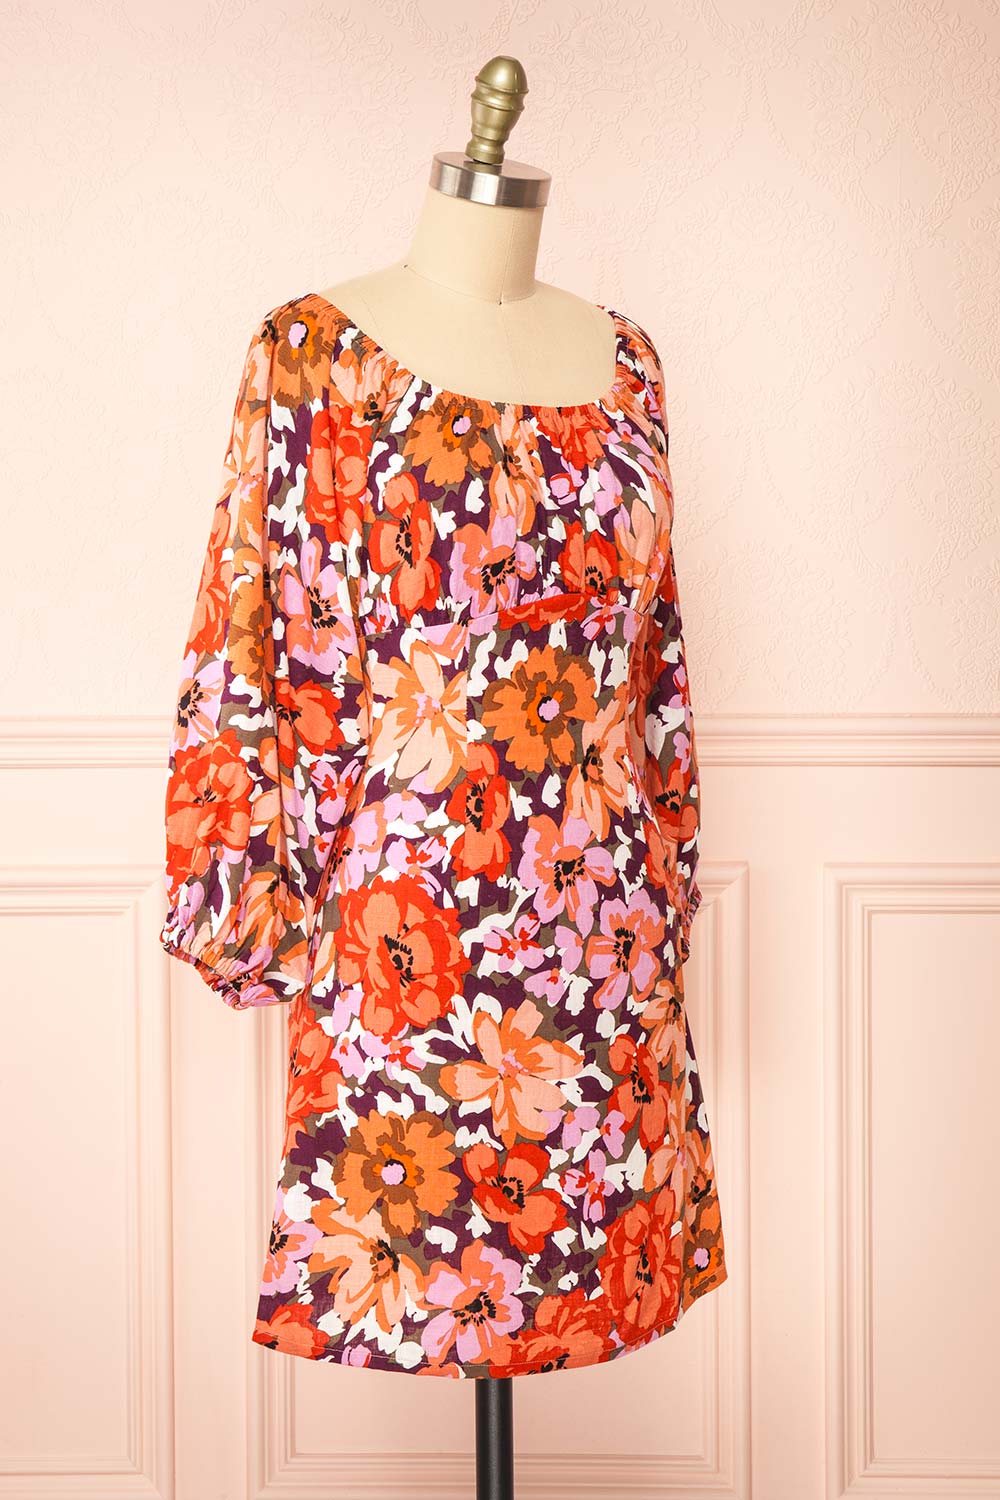 Idalai Floral Long Sleeve Off-Shoulder Short Dress | Boutique 1861 side view